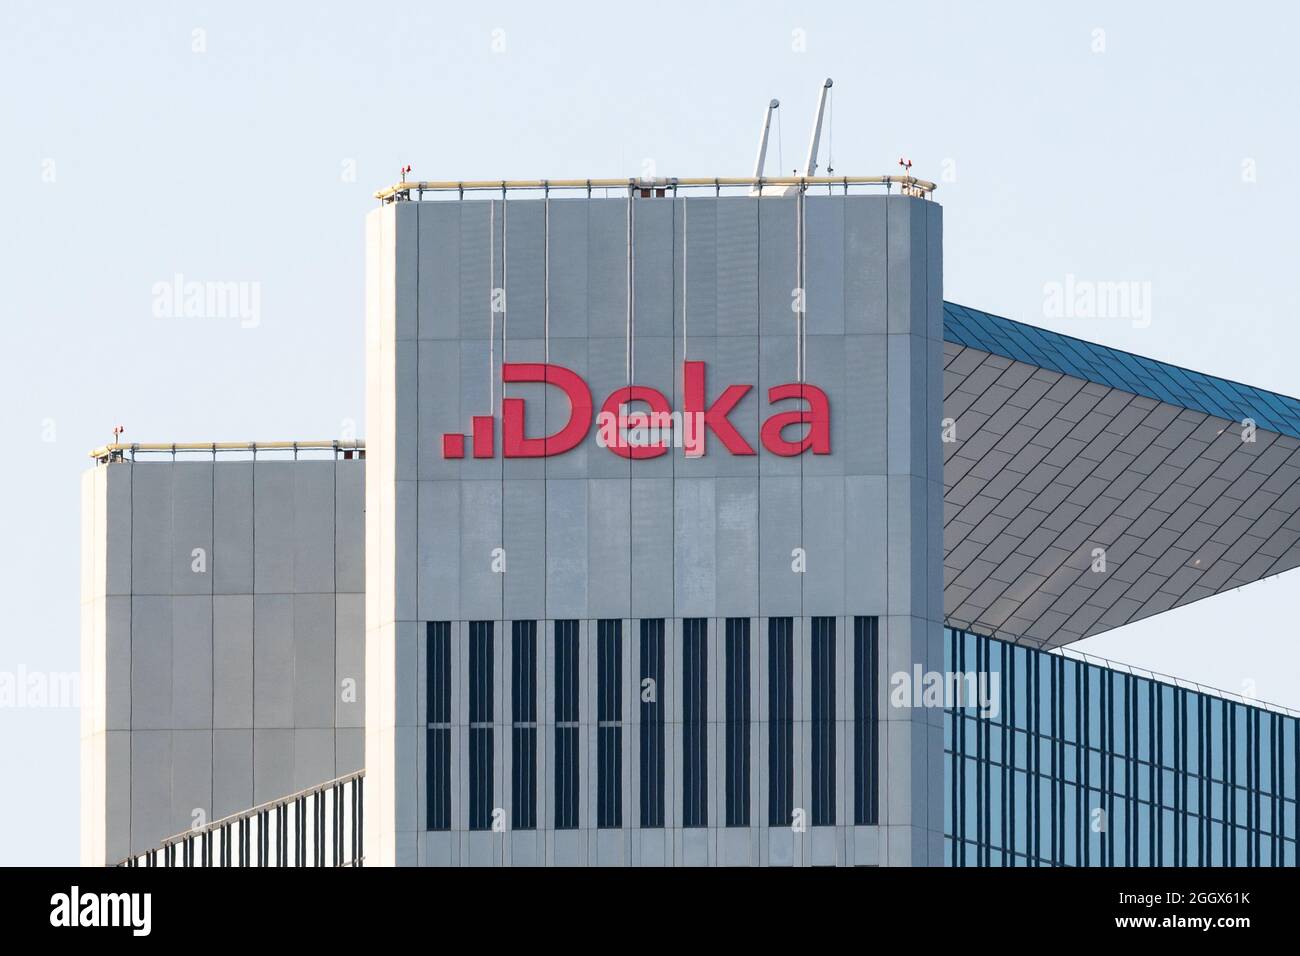 Deka DekaBank head office, Frankfurt am Main, Germany Stock Photo